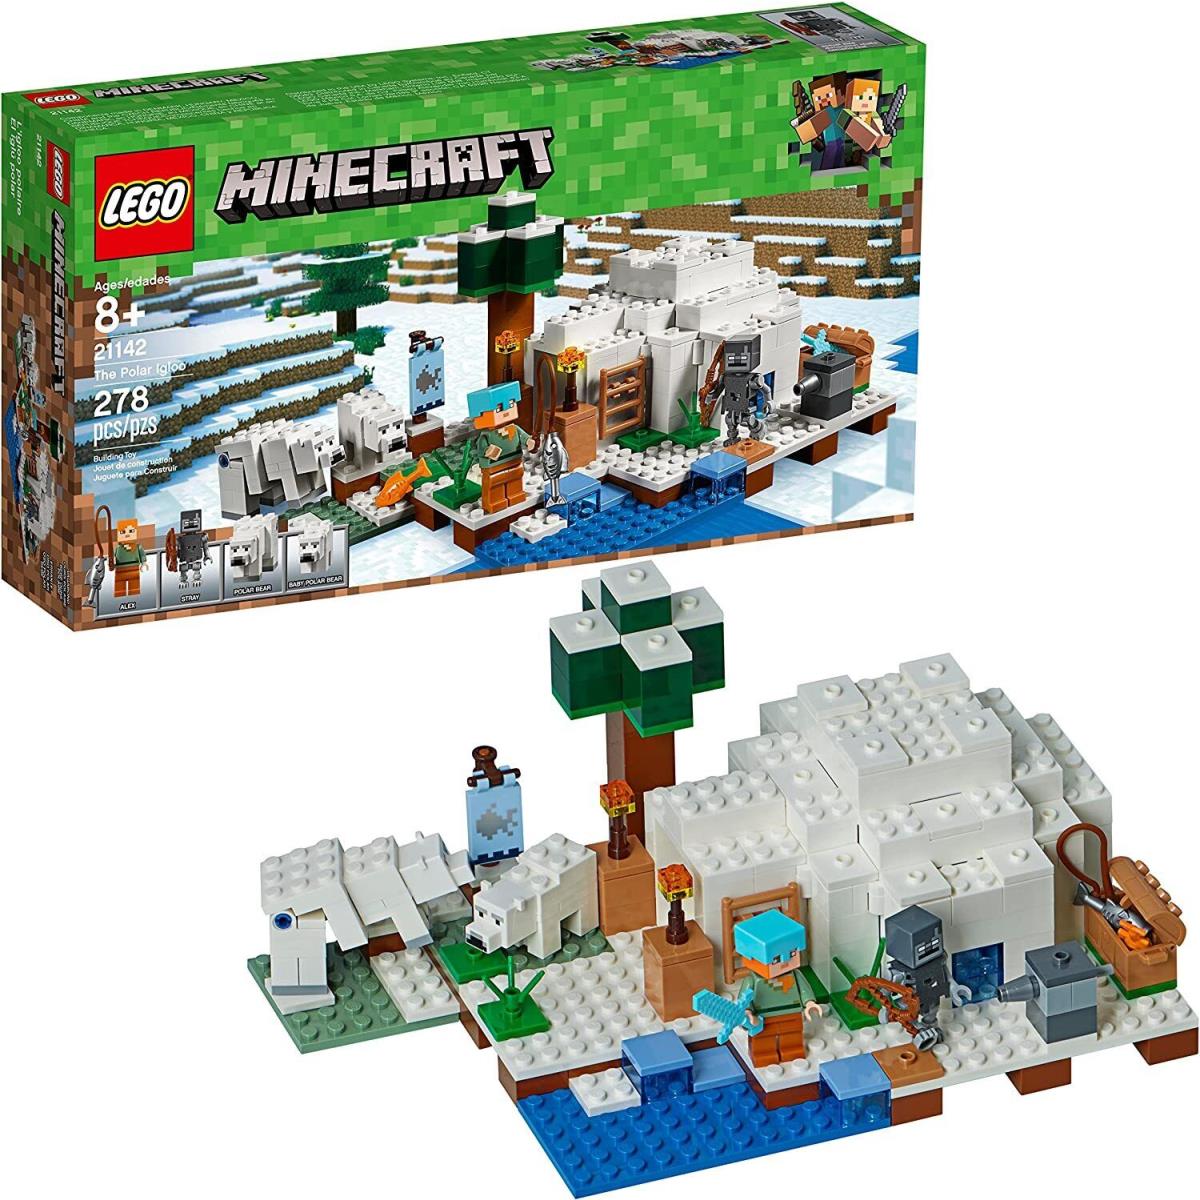 Lego Minecraft Set: The Polar Igloo 21142